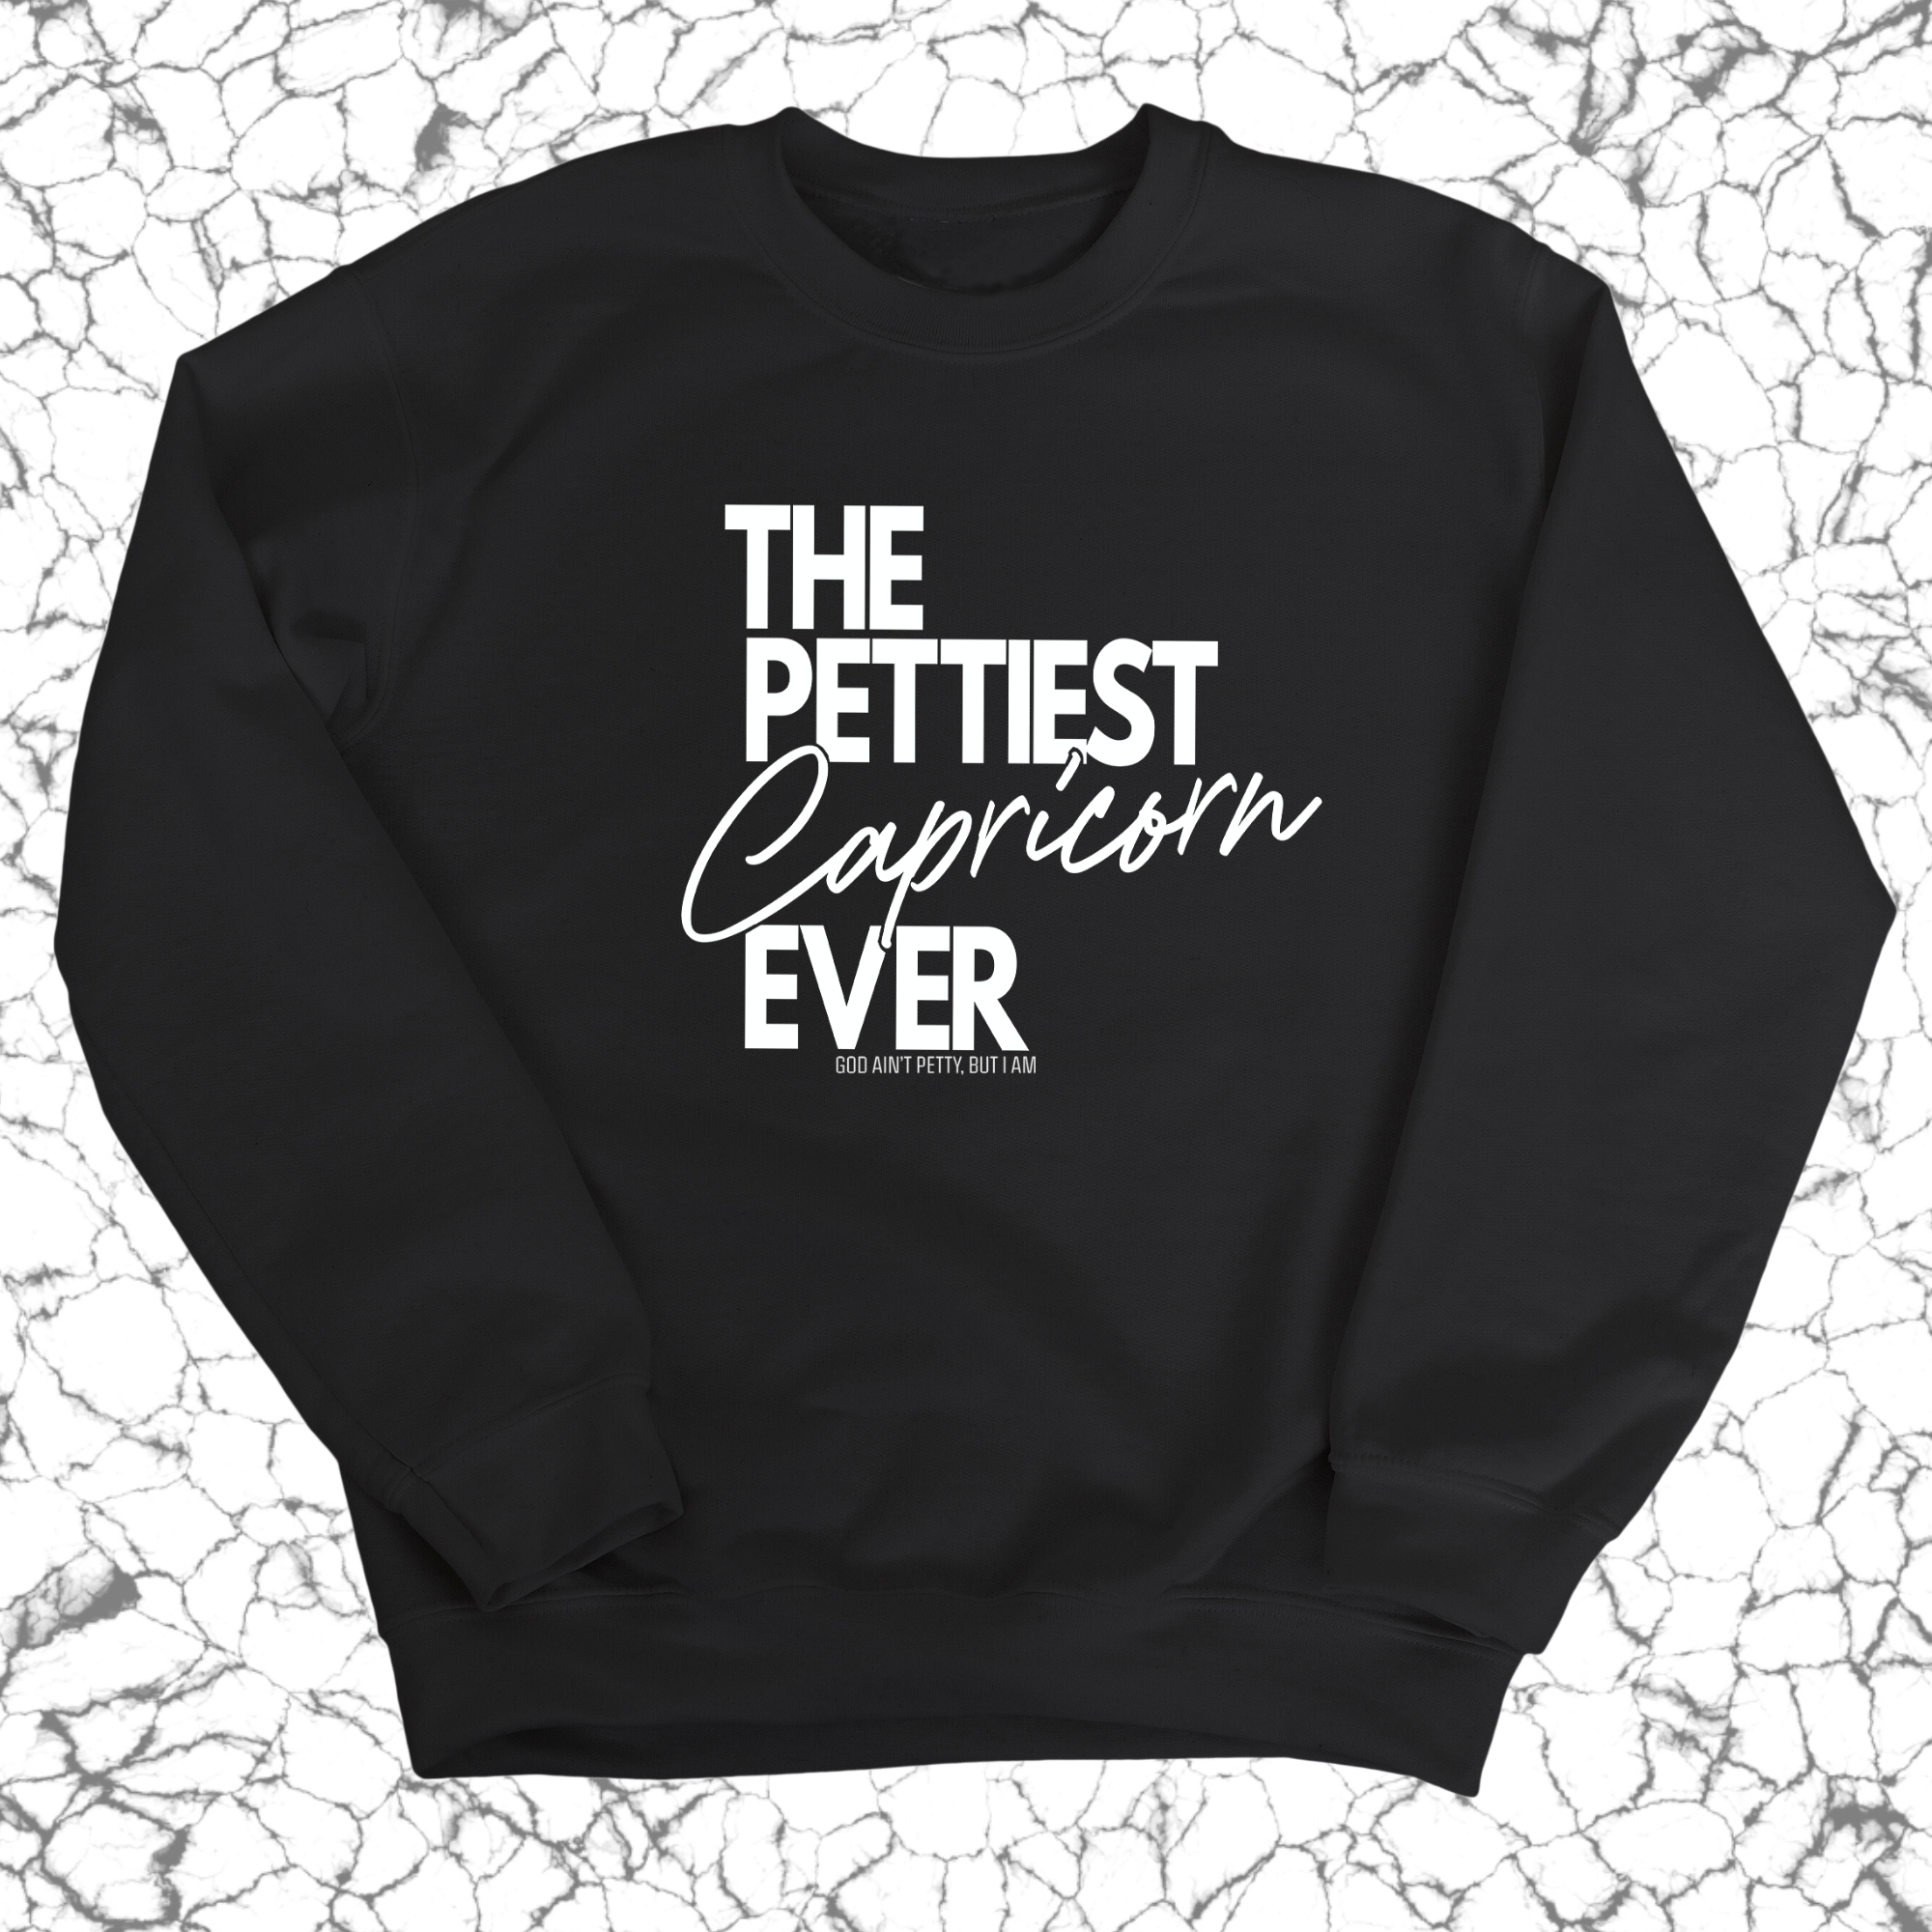 The Pettiest Capricorn Ever Unisex Sweatshirt-Sweatshirt-The Original God Ain't Petty But I Am